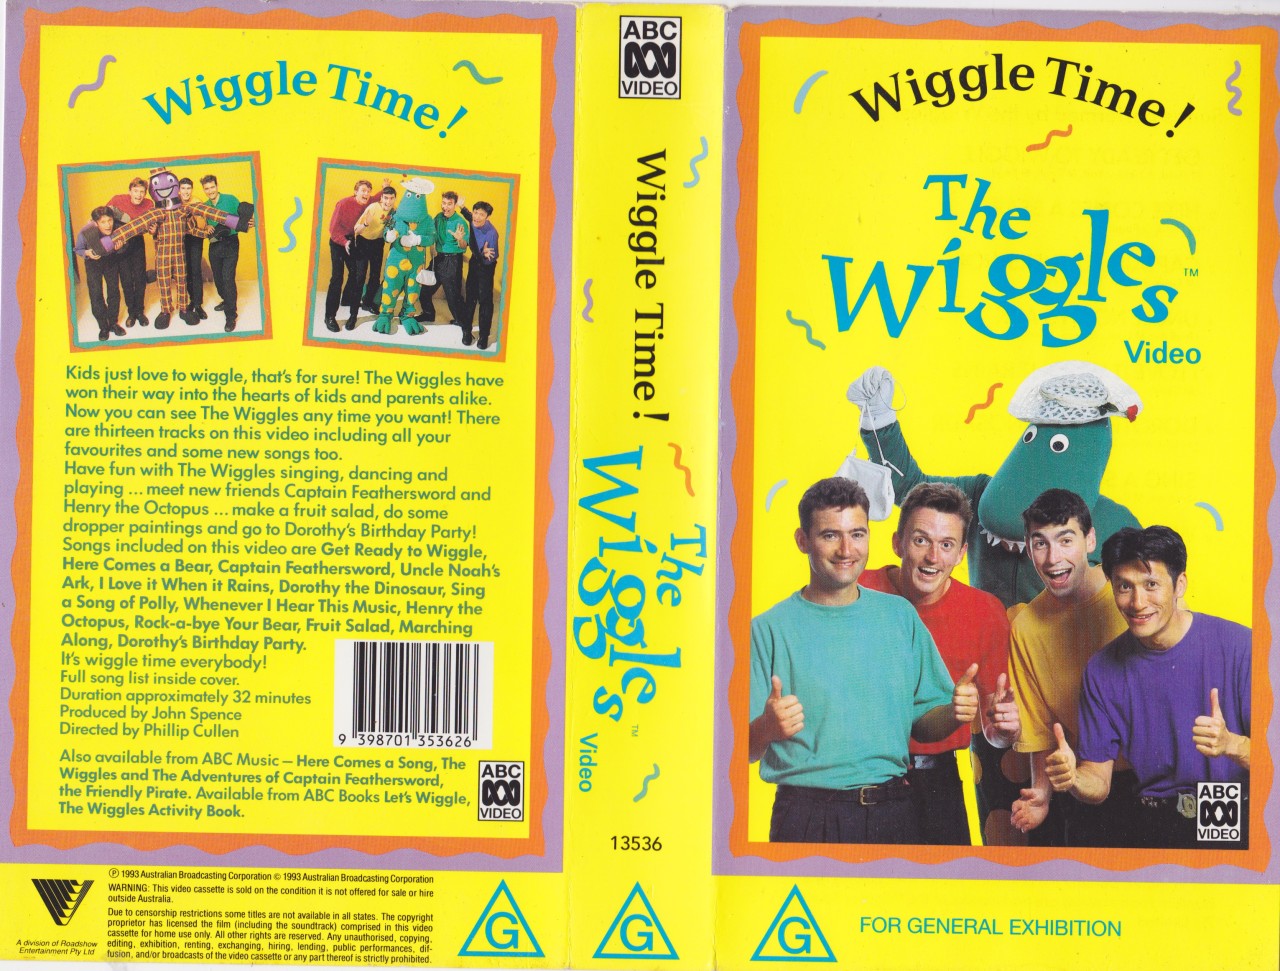 The Wiggles - Wiggle Time